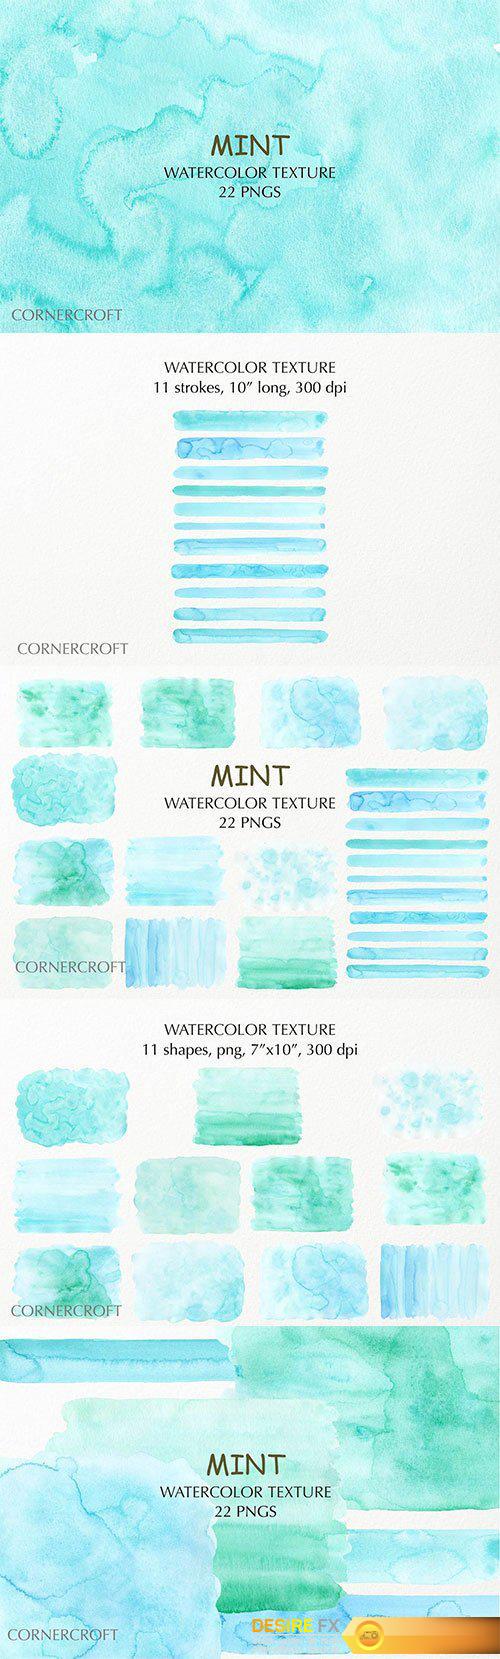 Watercolor Texture Mint